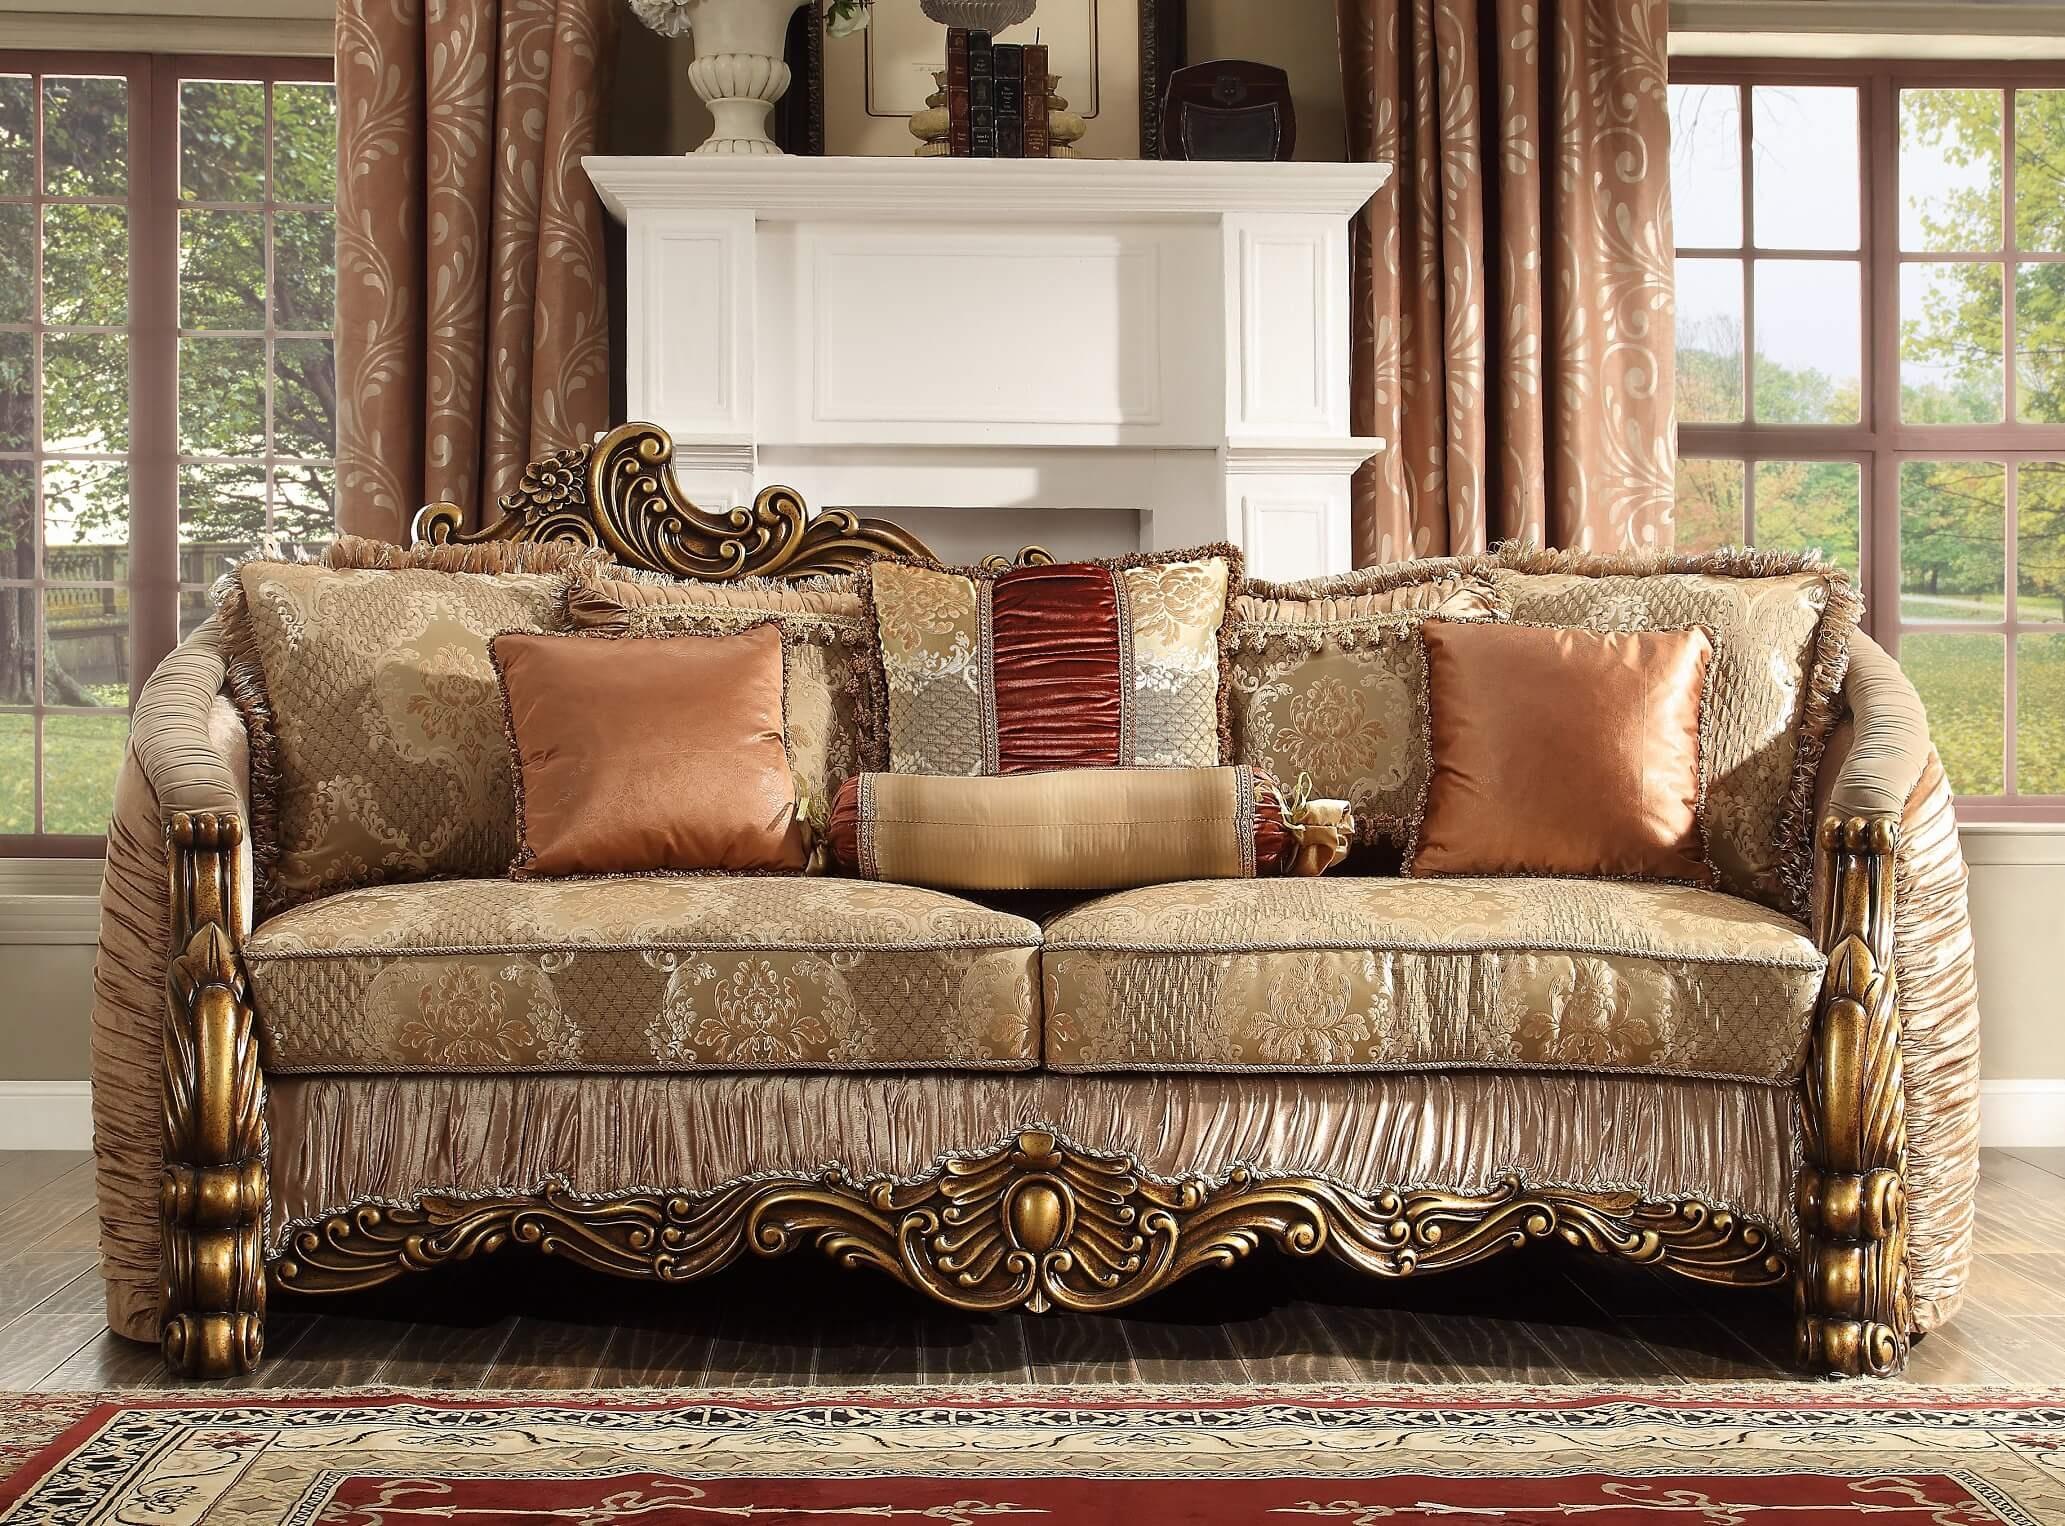 Traditional Sofa HD-1601 HD-S1601 in Metallic, Antique, Gold Fabric